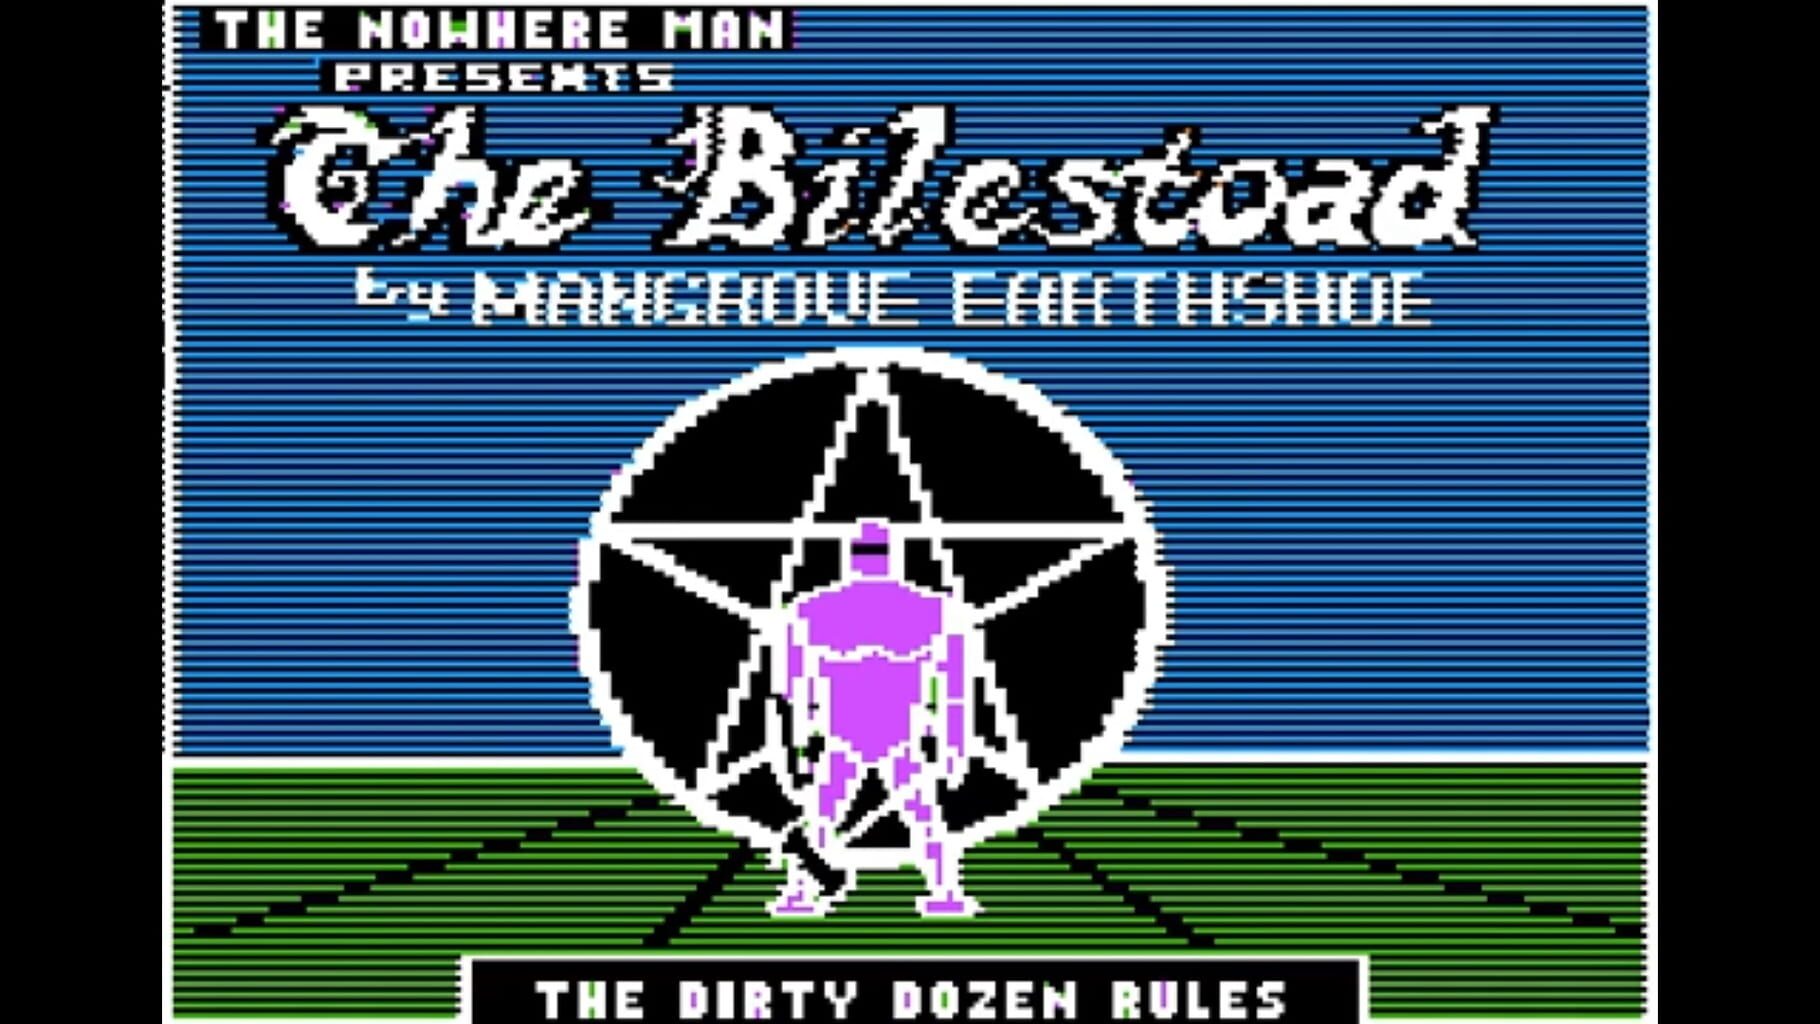 The Bilestoad Image